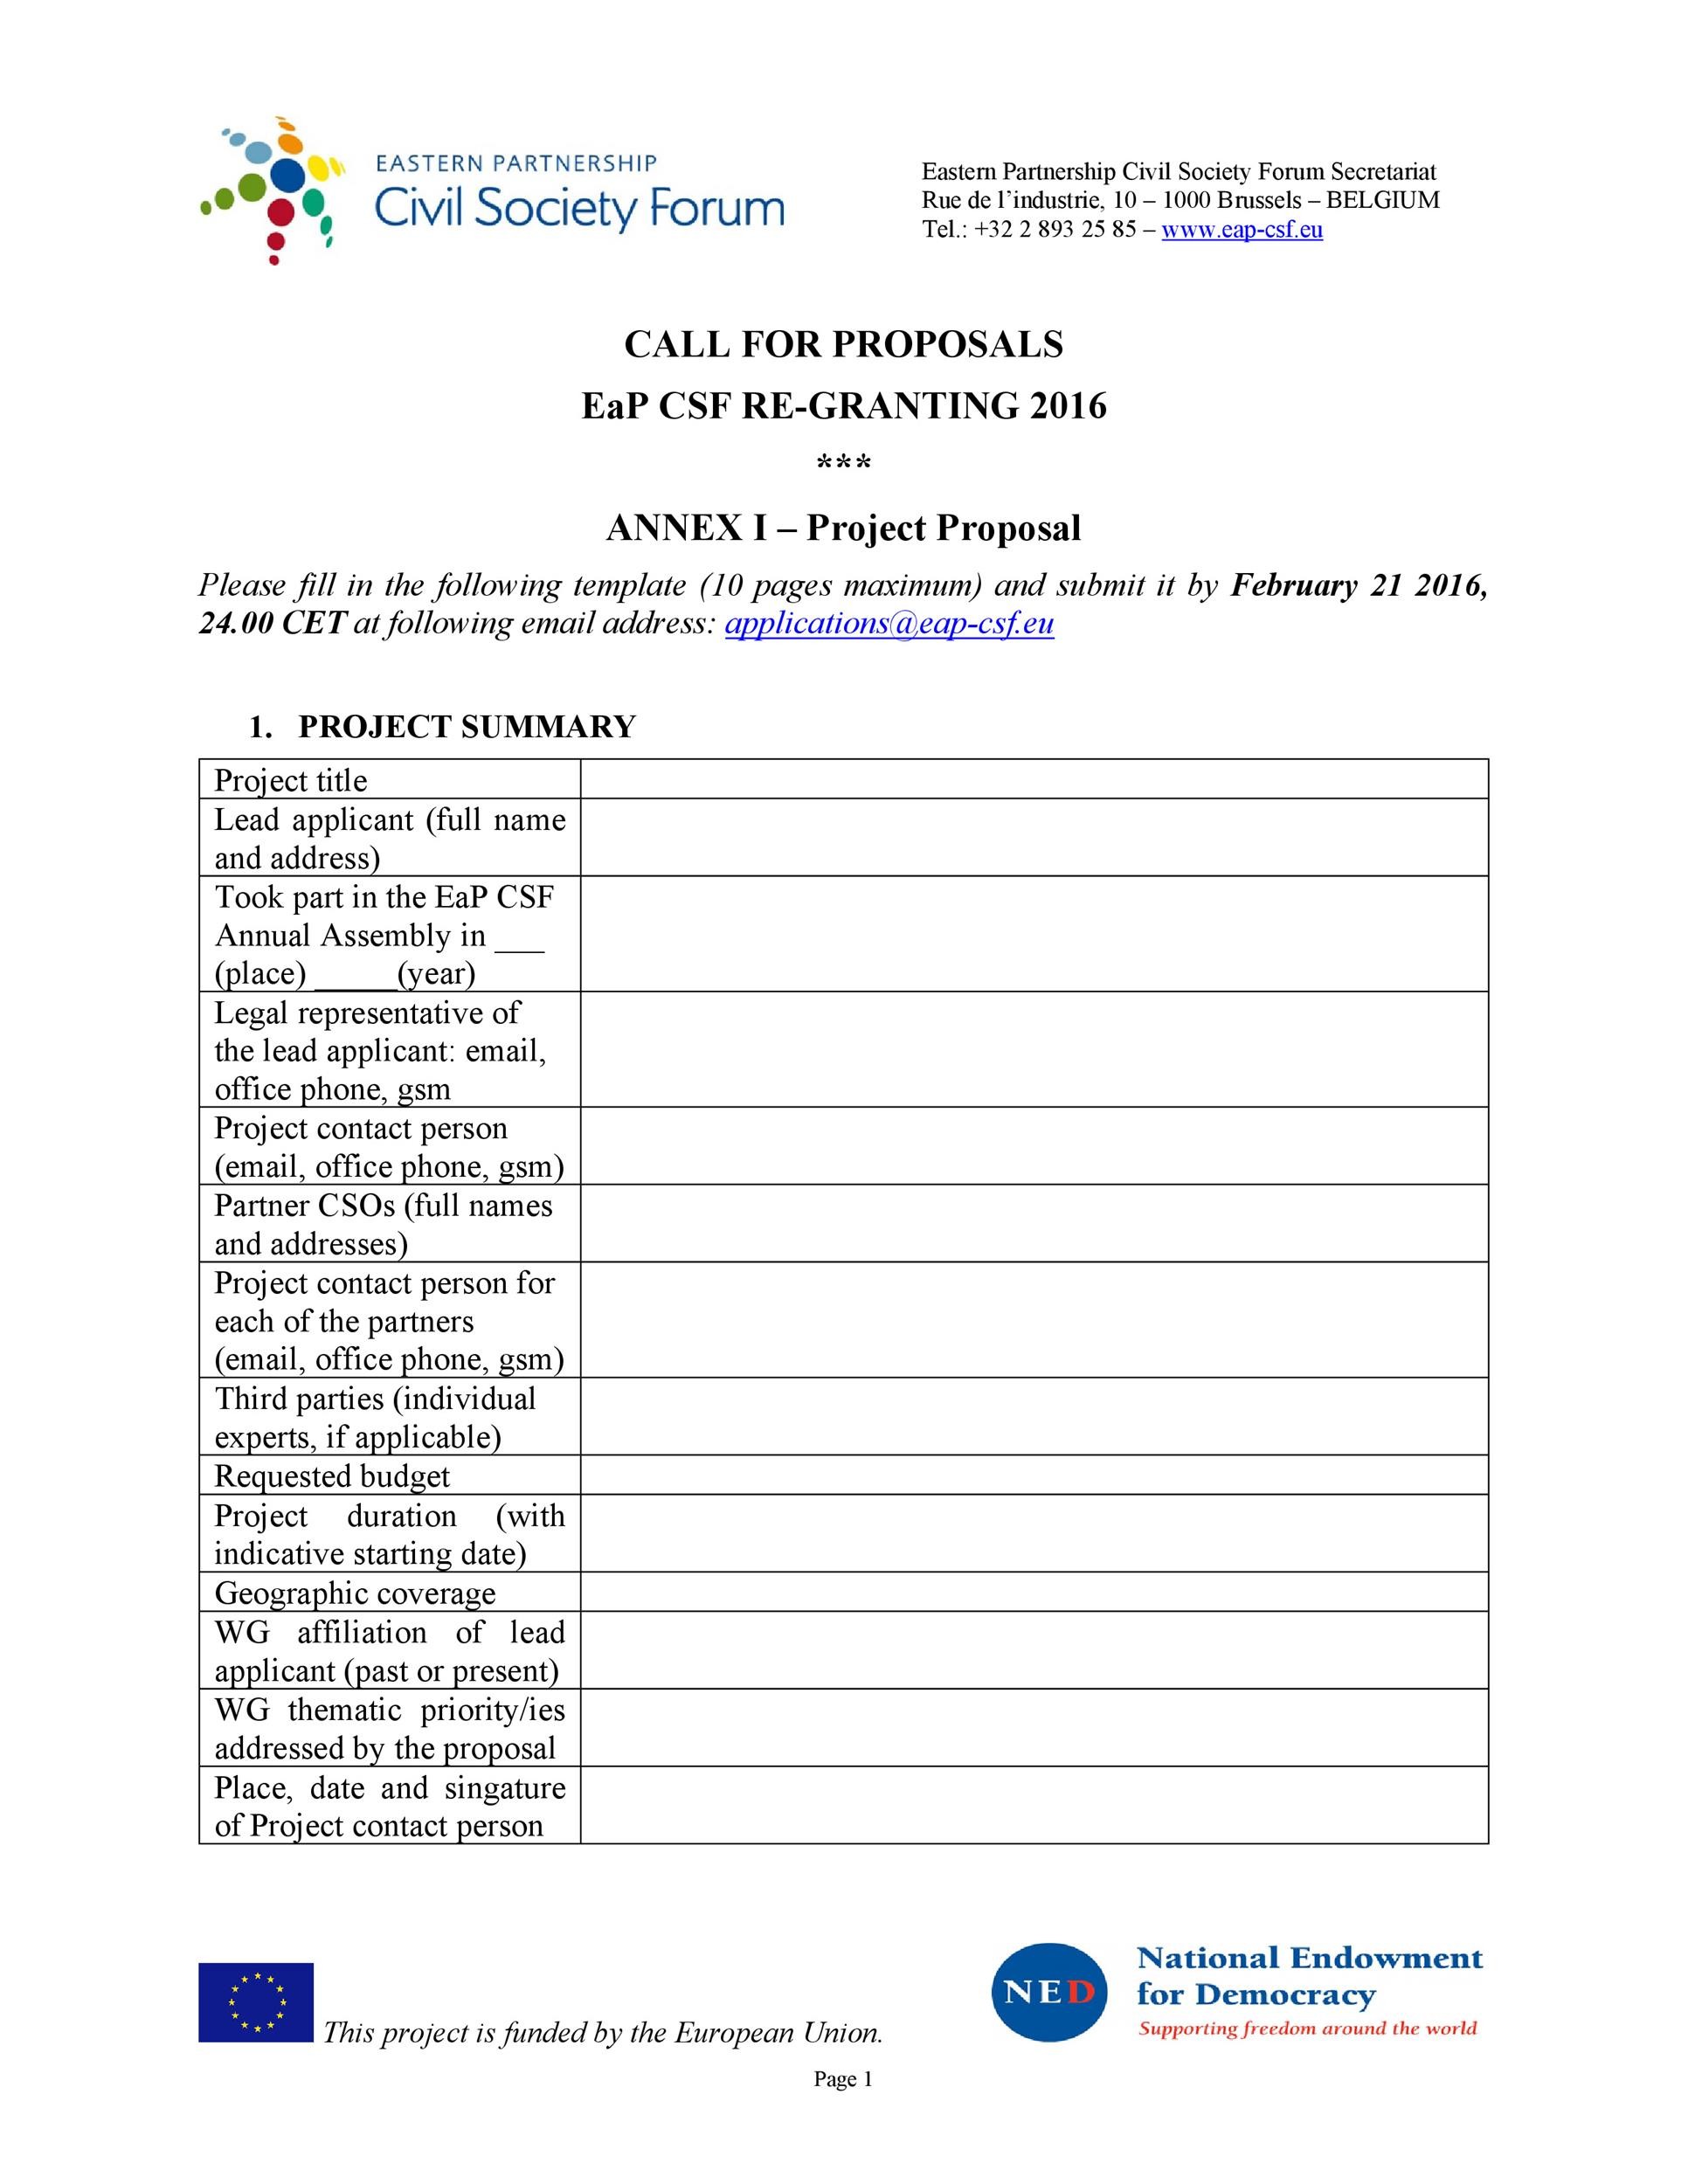 43 Professional Project Proposal Templates ᐅ TemplateLab